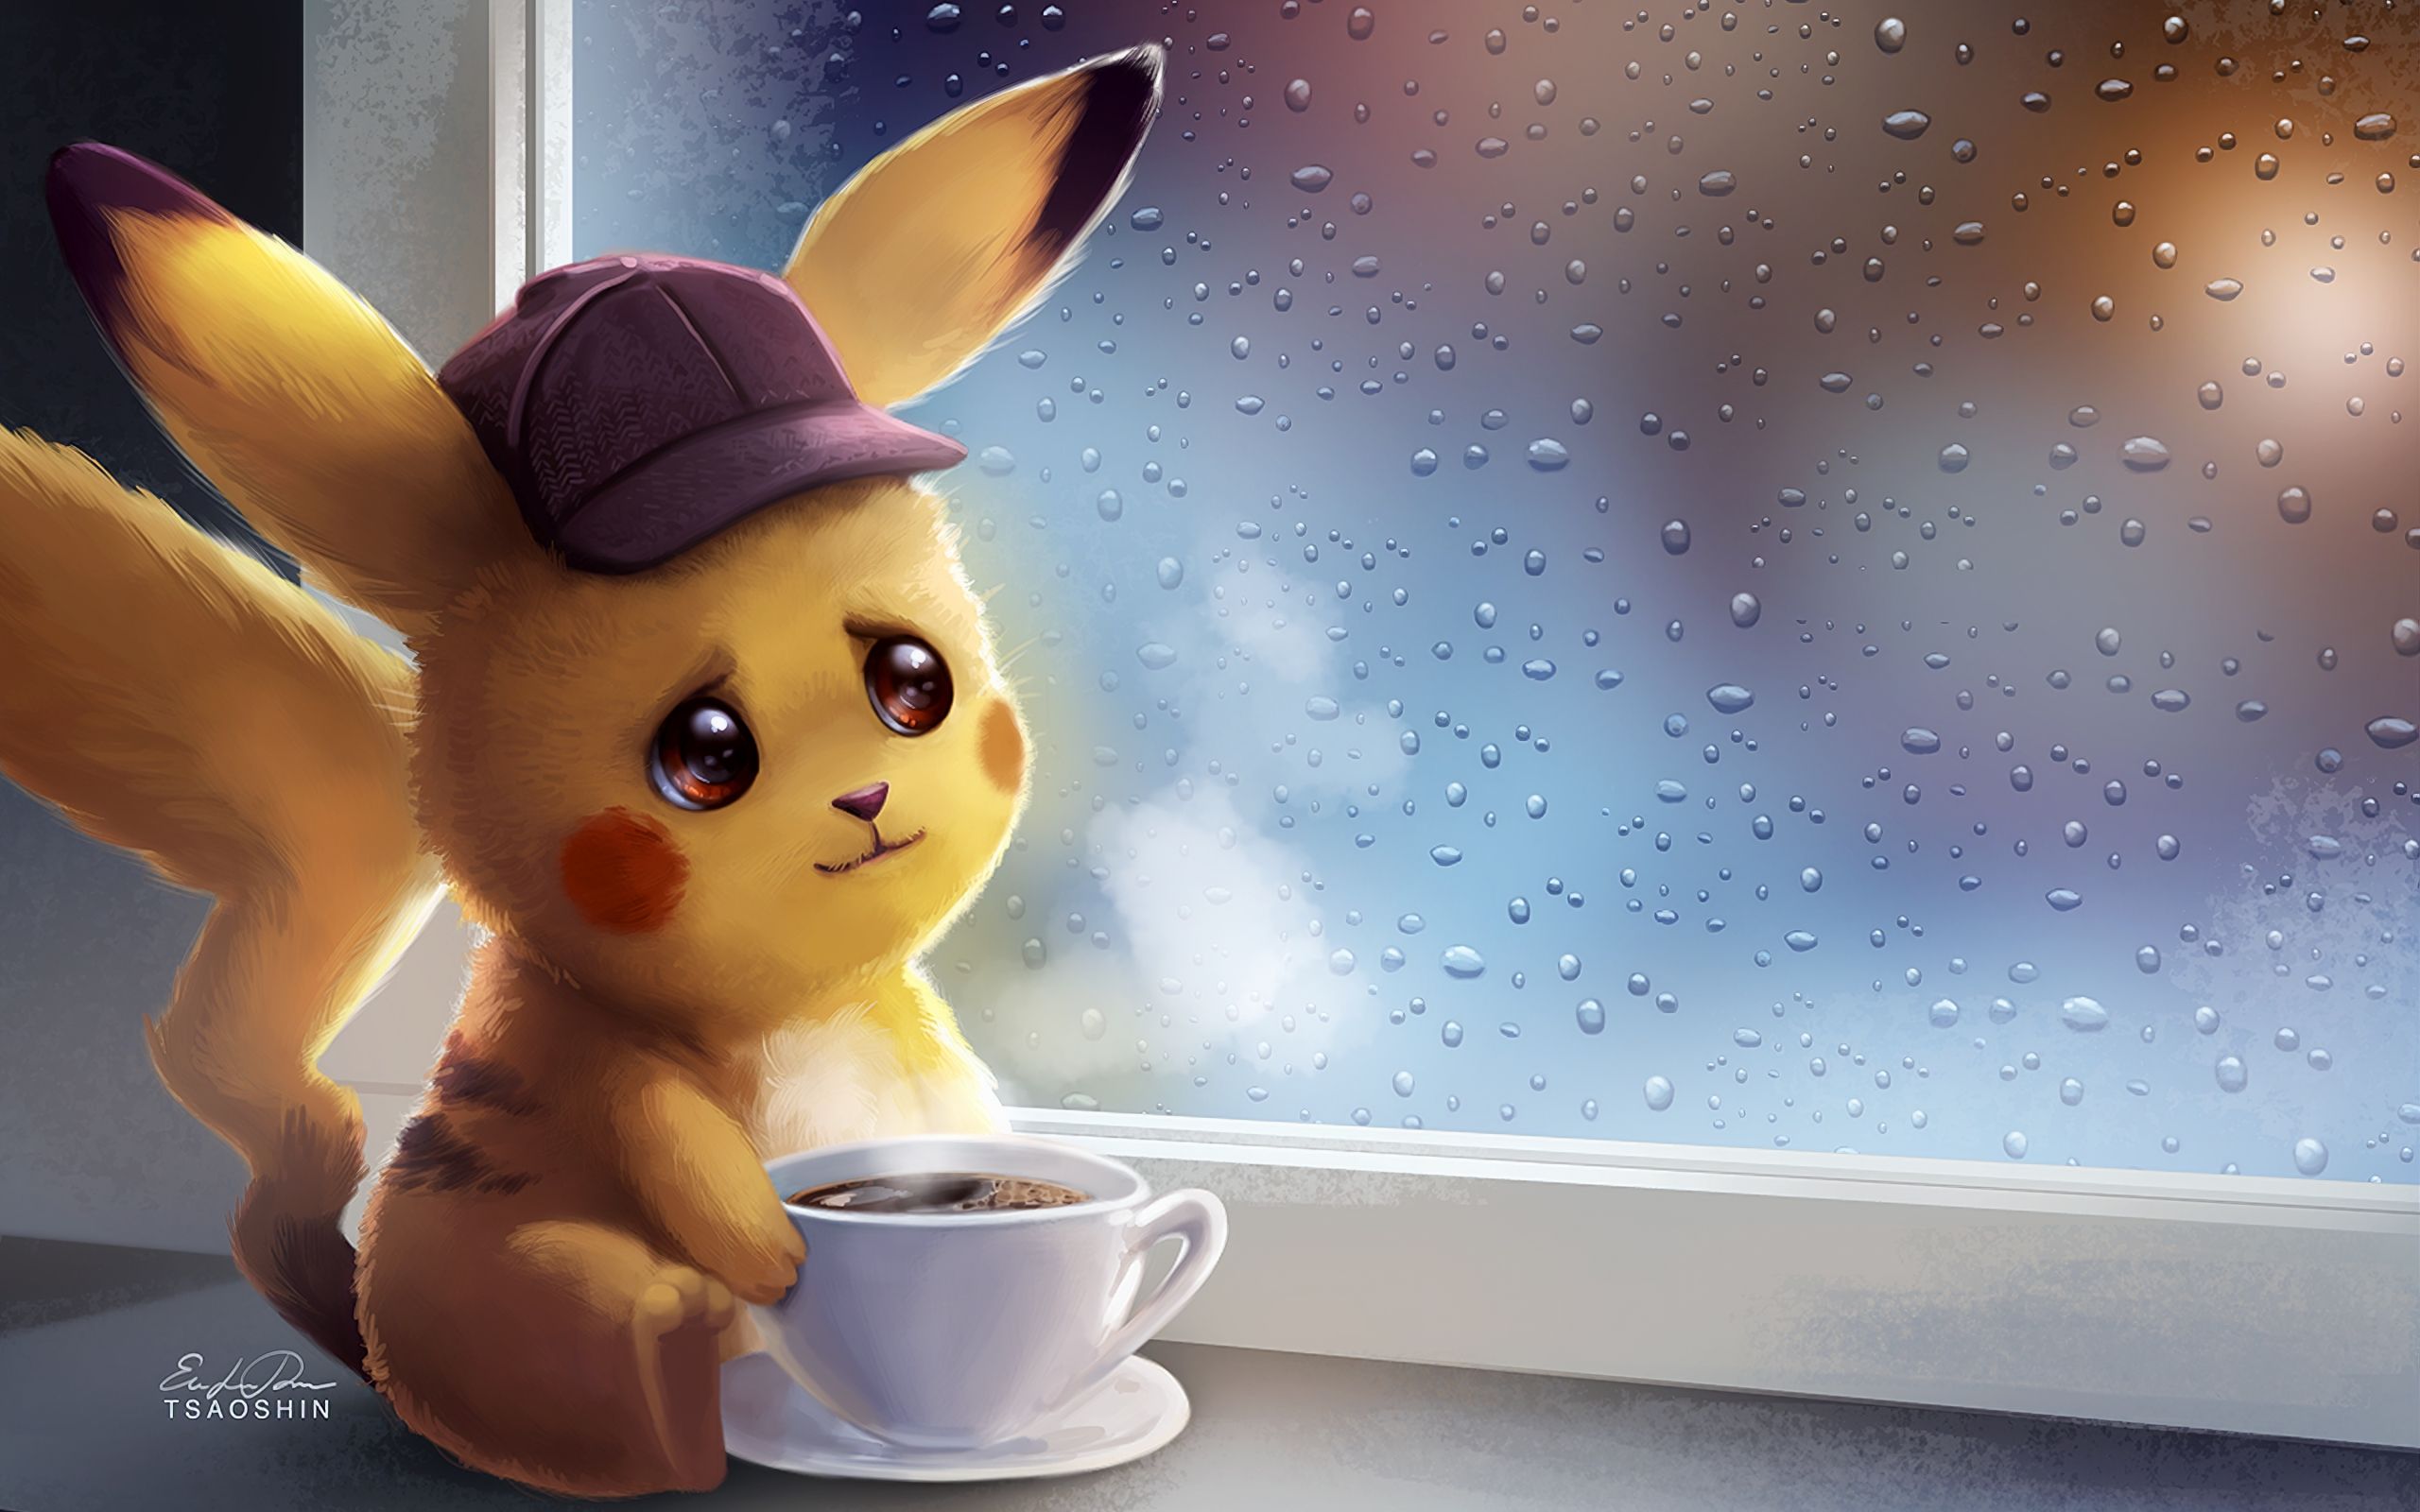 Wallpaper Coffee, Cup, Pikachu, Pokémon, Rain background